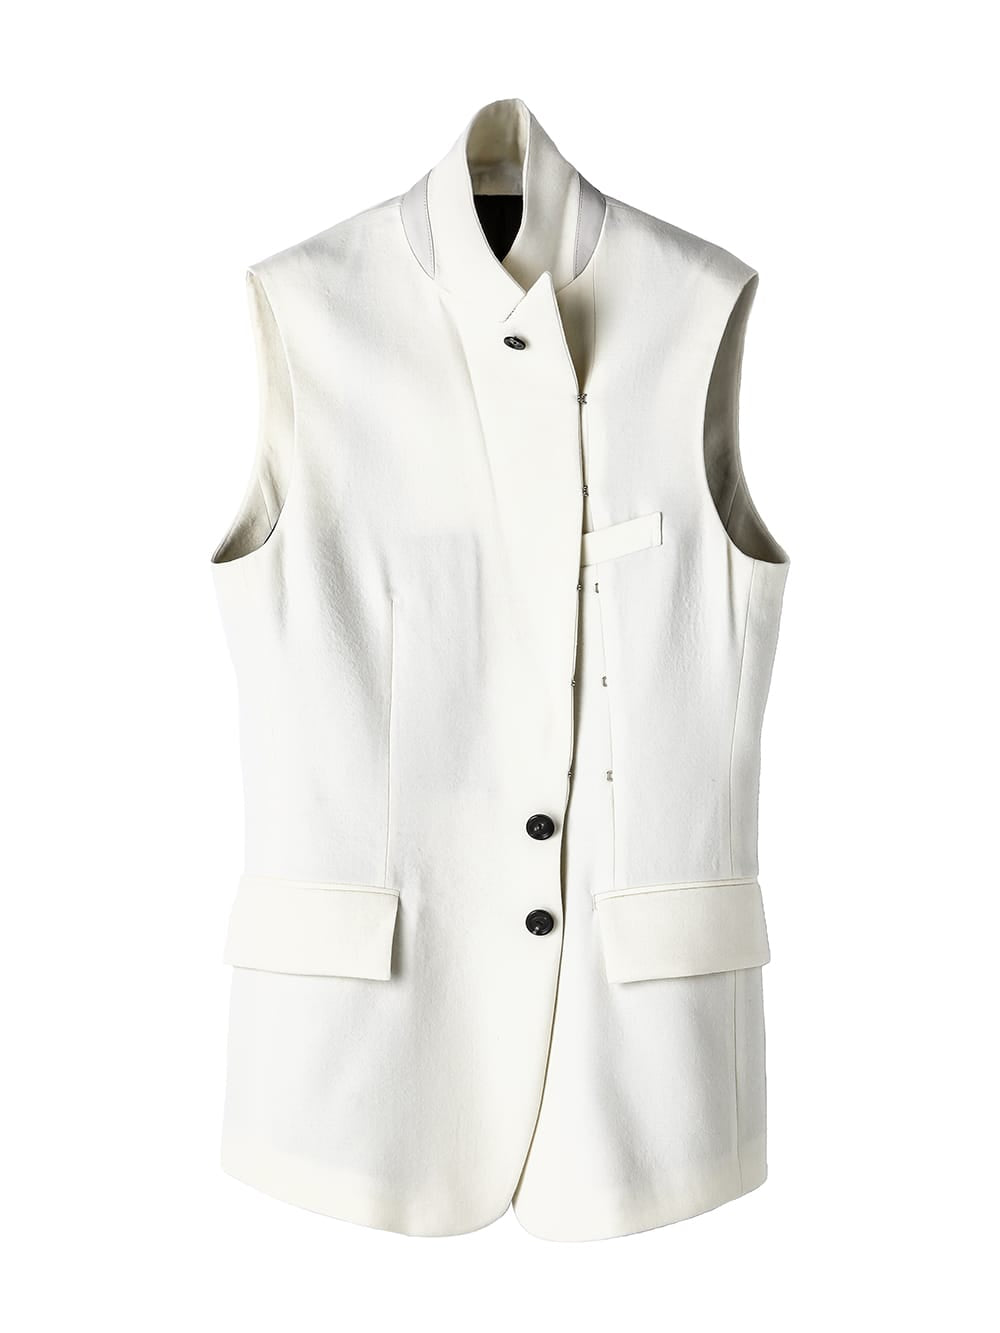 sj.0007bAW23-white right - left sleeveless peaked lapel jacket 